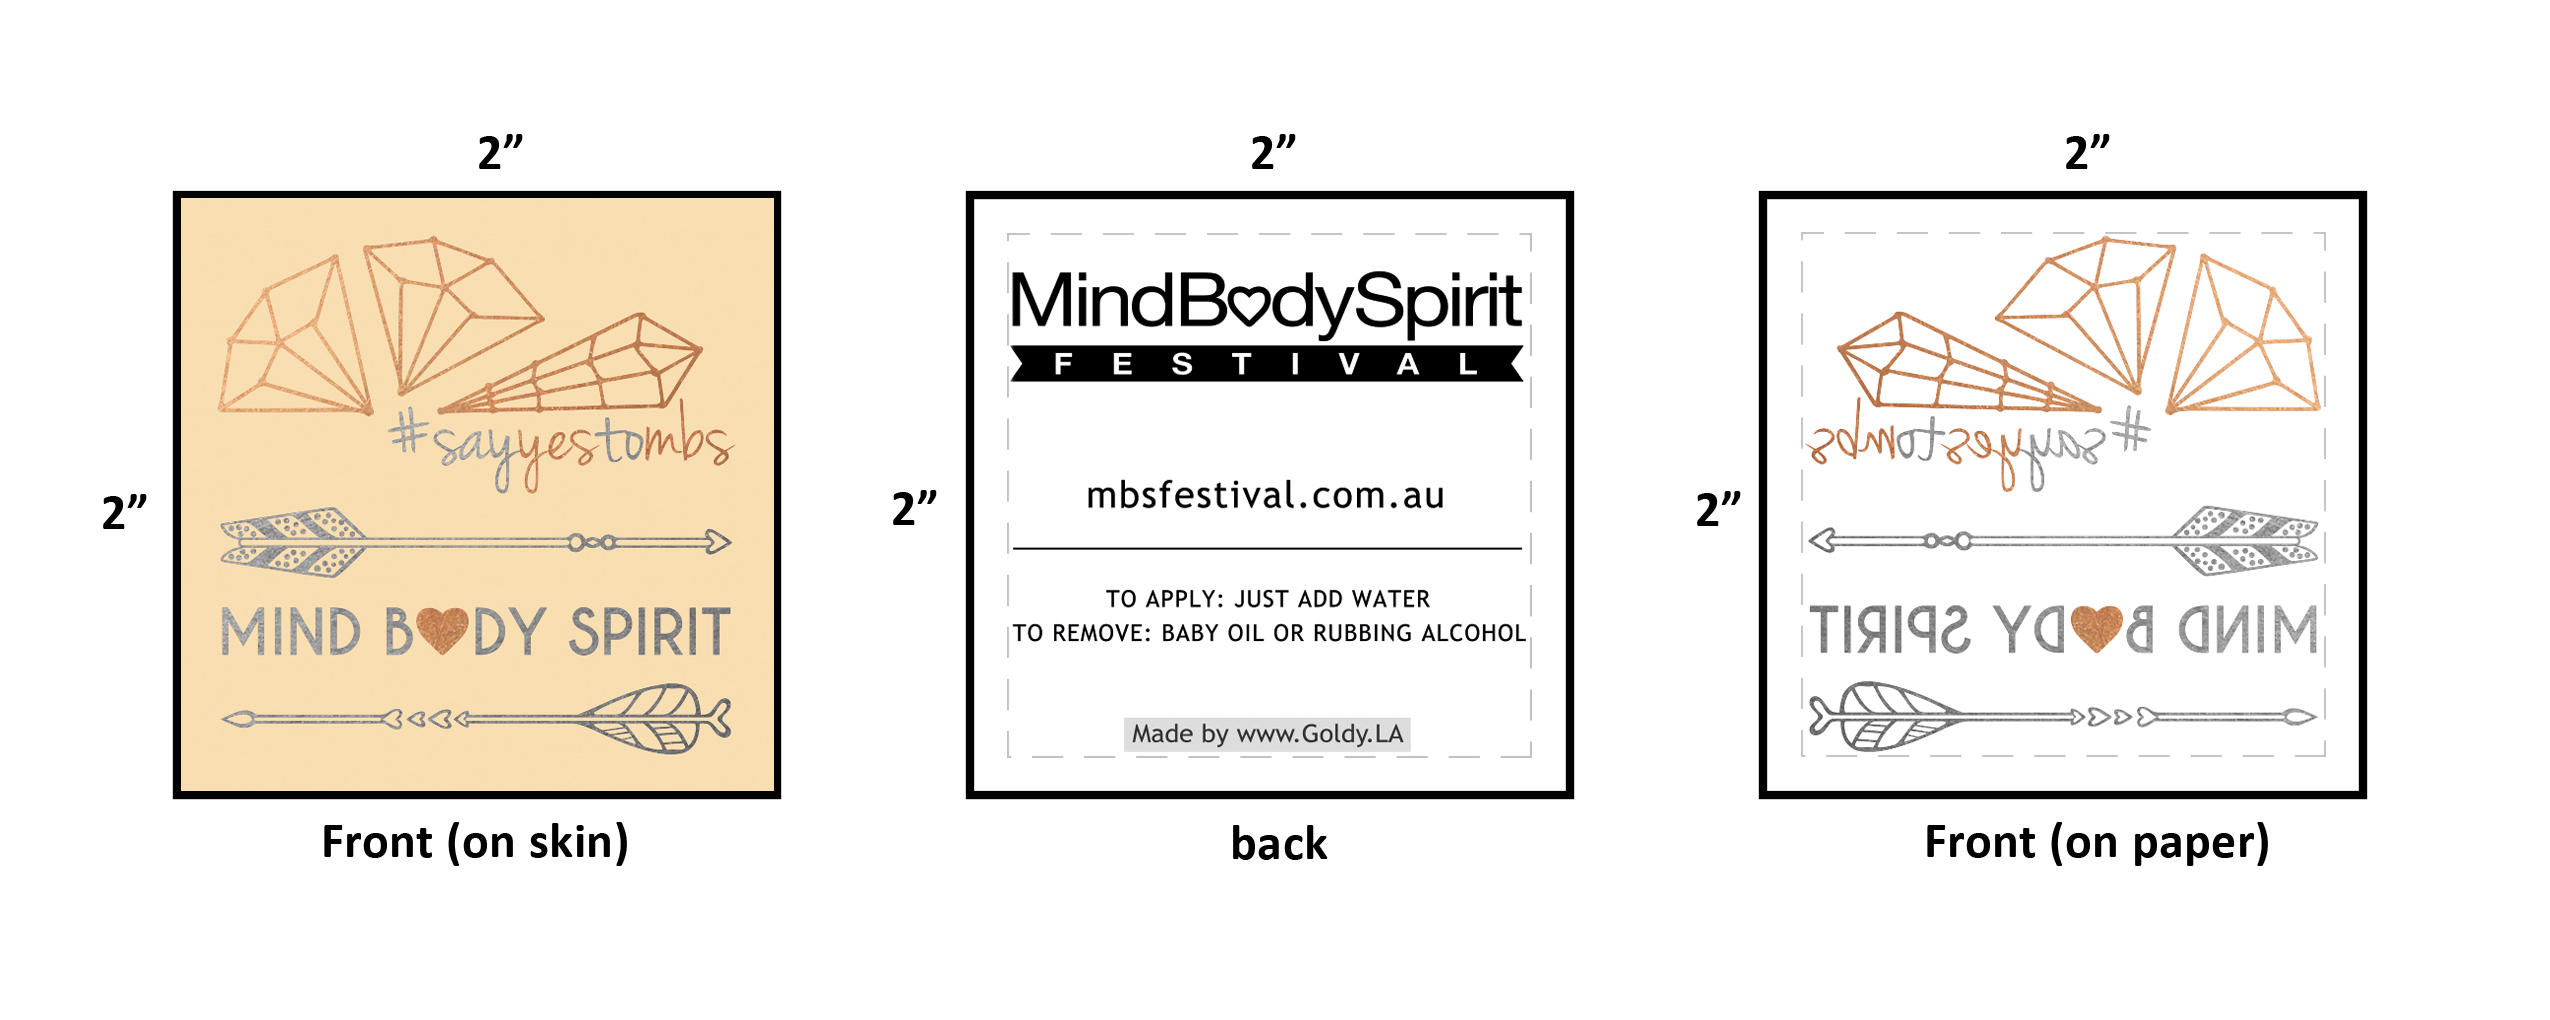 mindbodyspirit festival australia custom metallic flash temporary tattoos